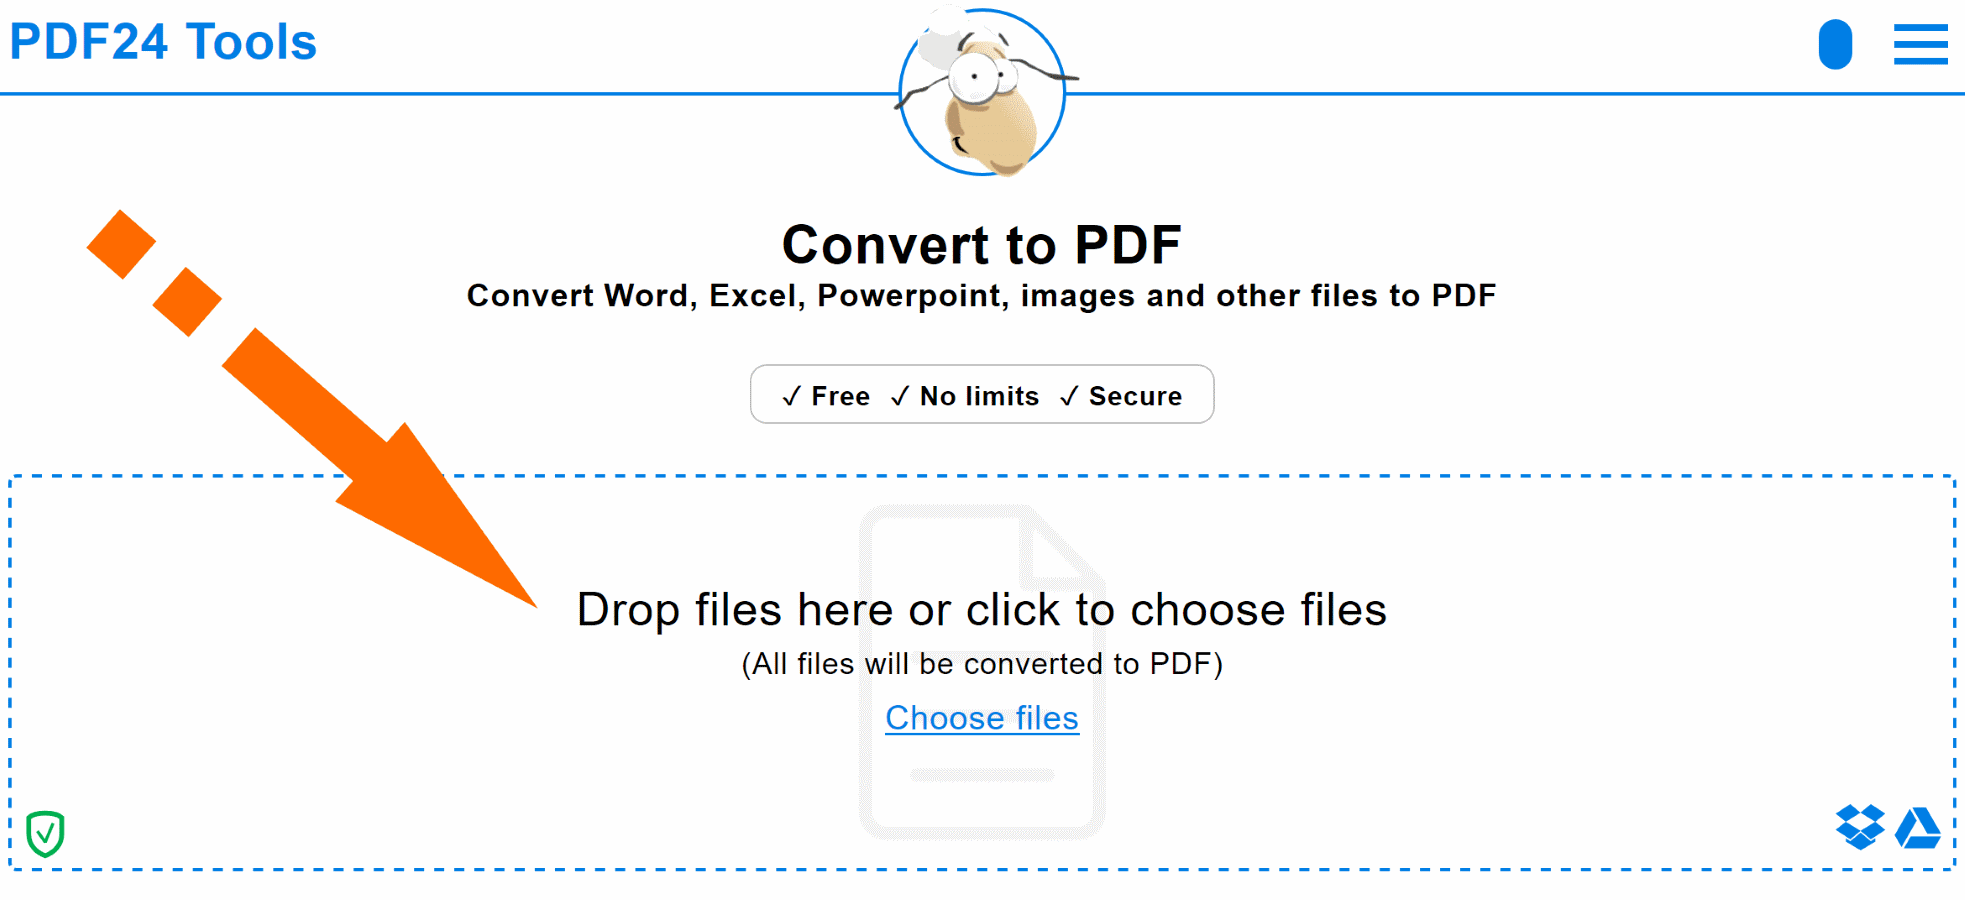 tiff to pdf converter software online